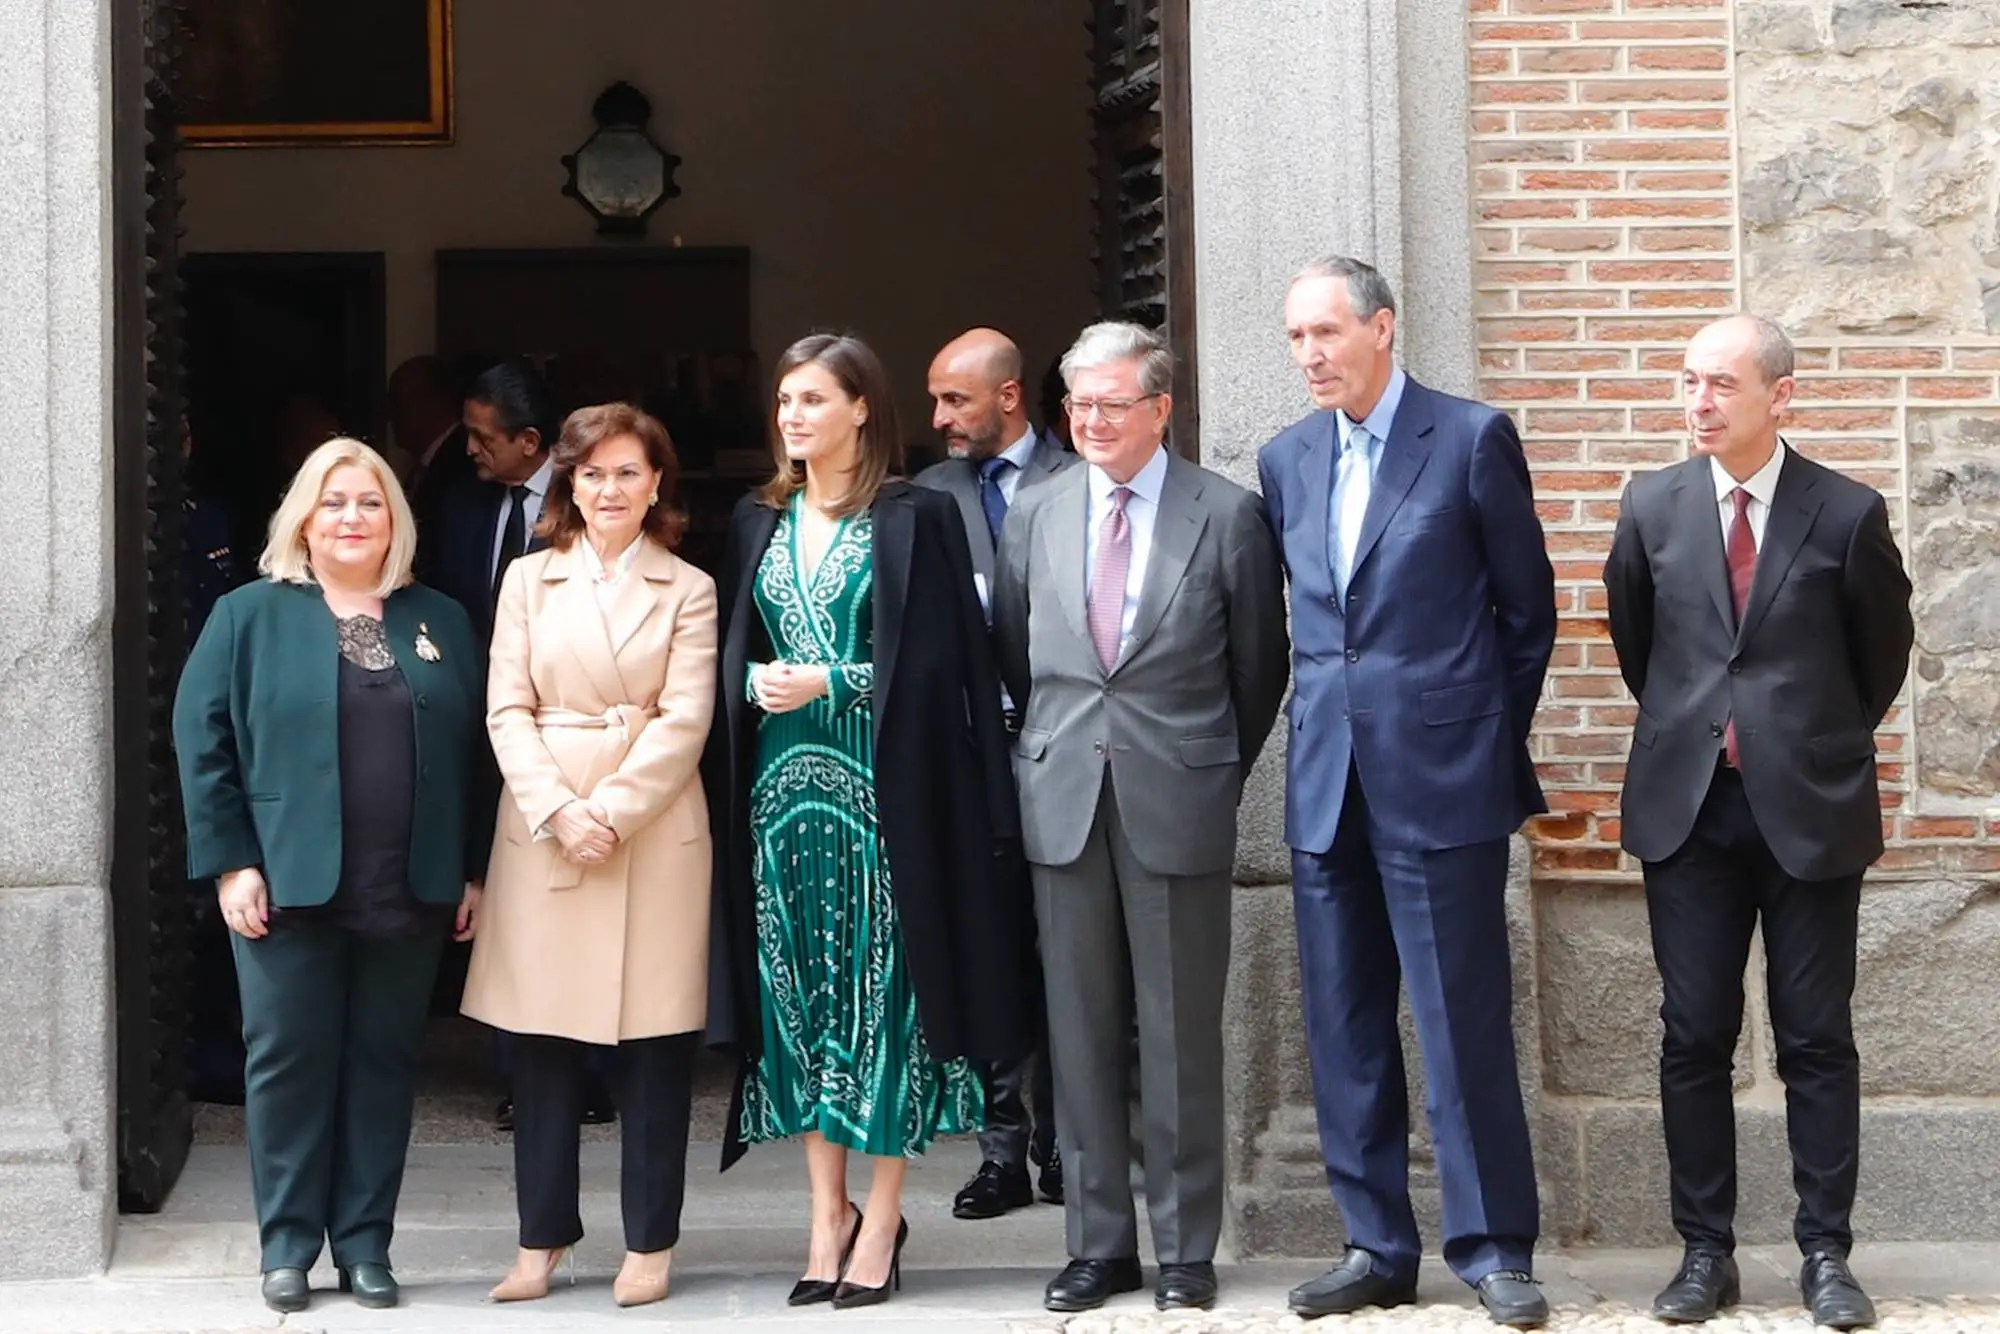 Queen Letizia visited the Royal Monastery